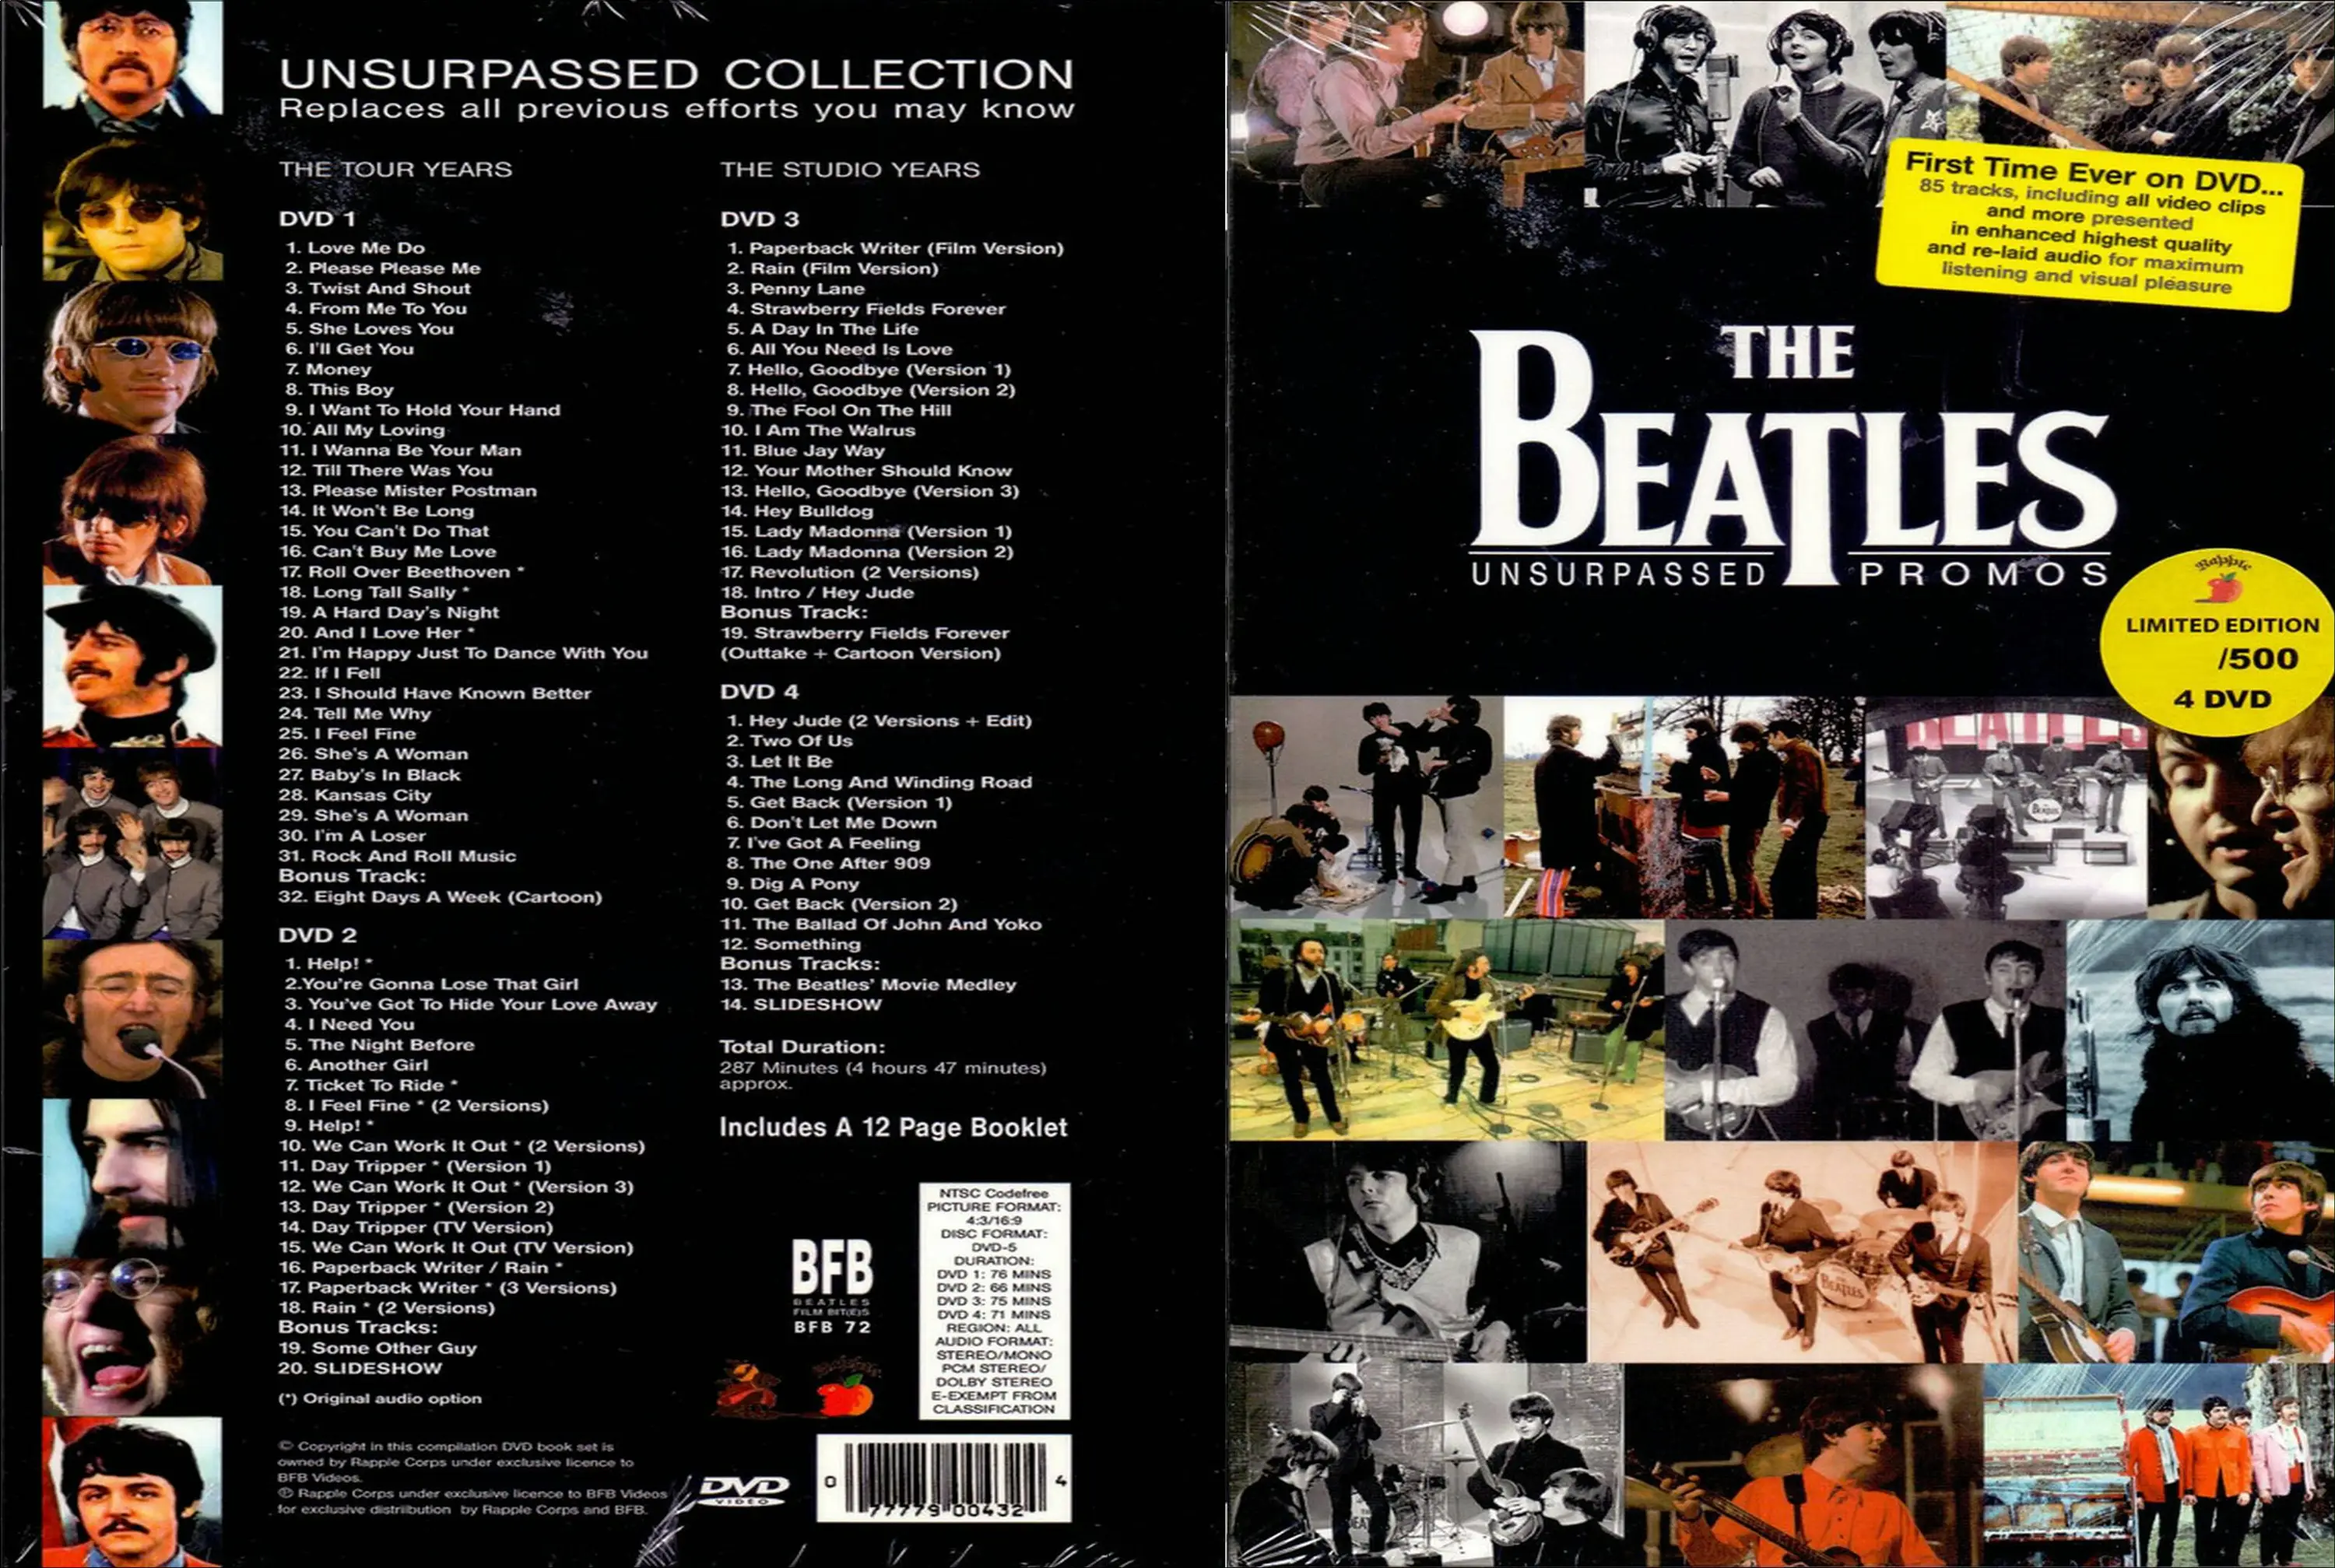 The Beatles Unsurpassed Promos 11 4 X Dvd 5 Avaxhome